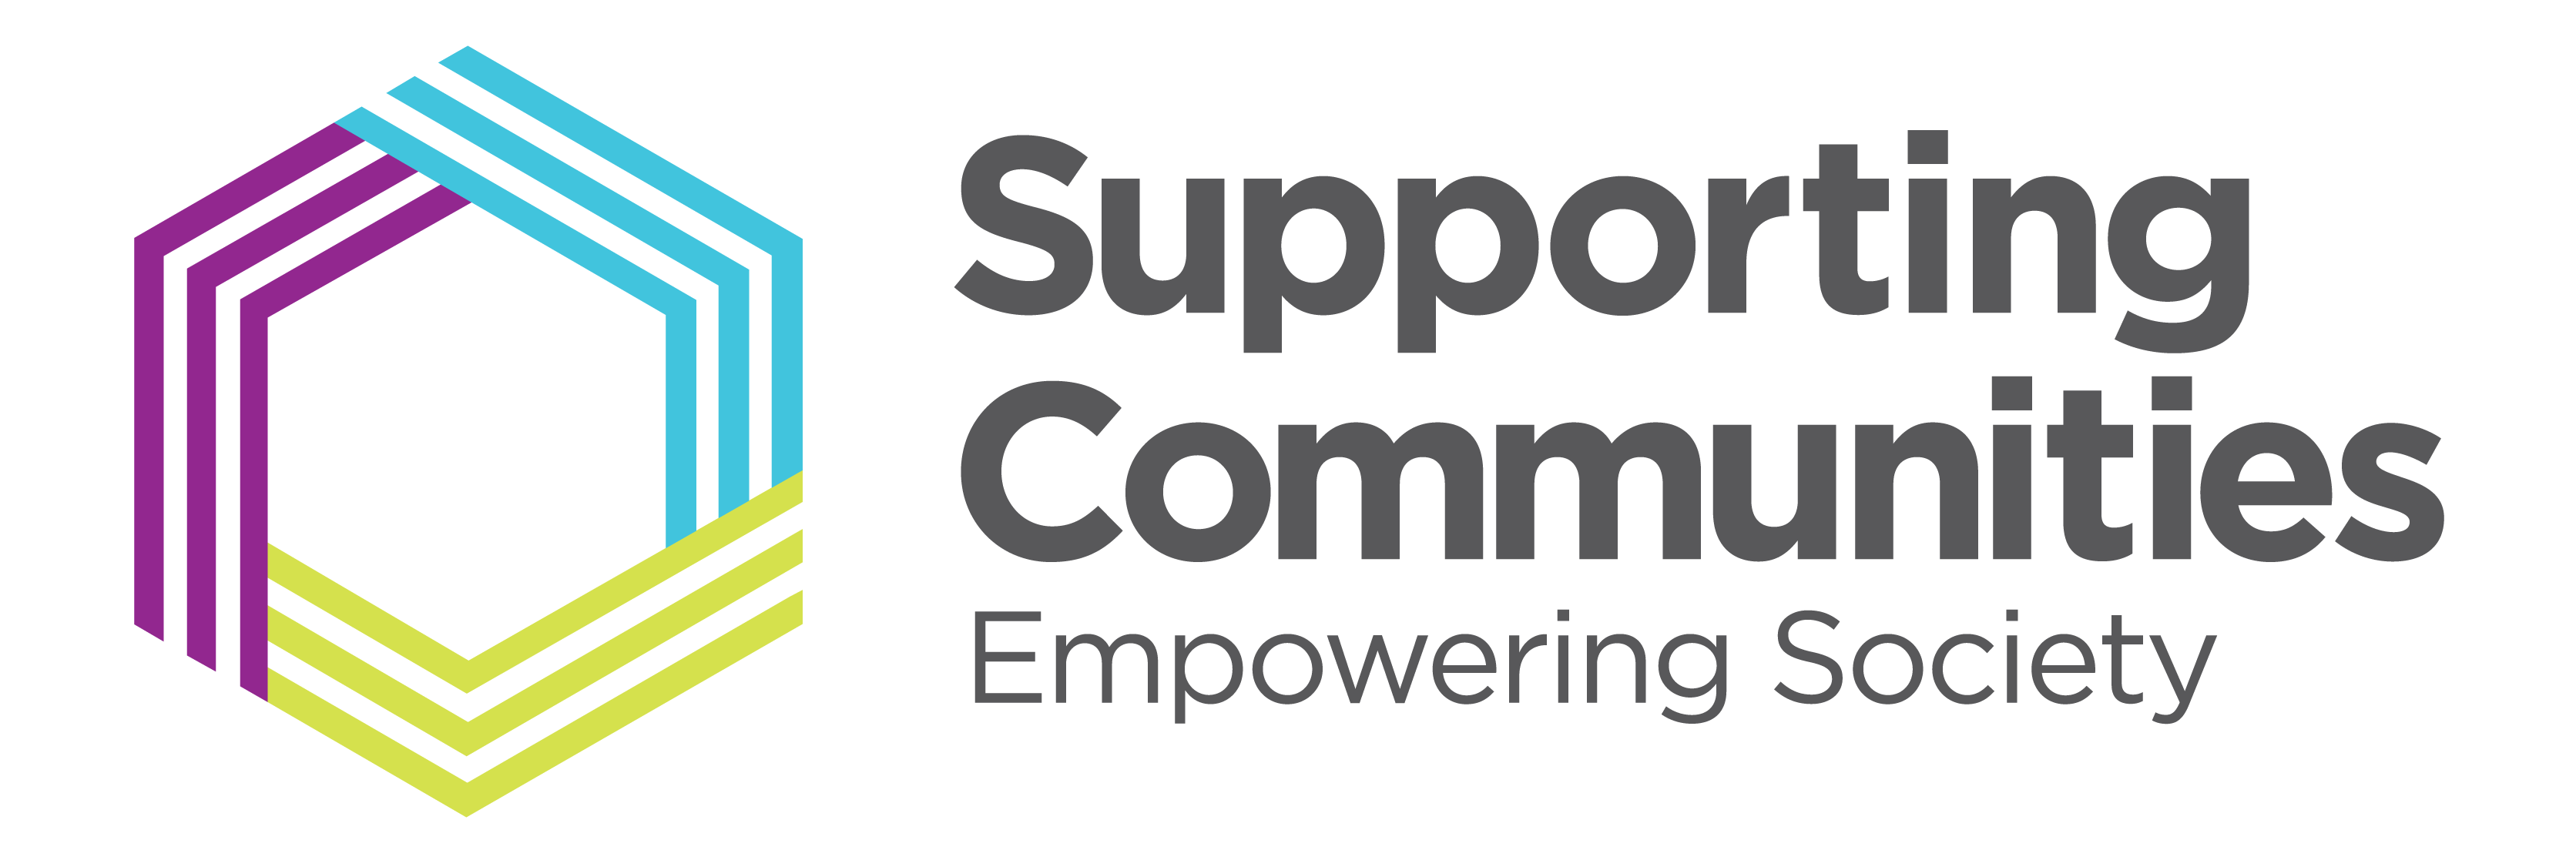 Supporting Communities Empowering Societies logo